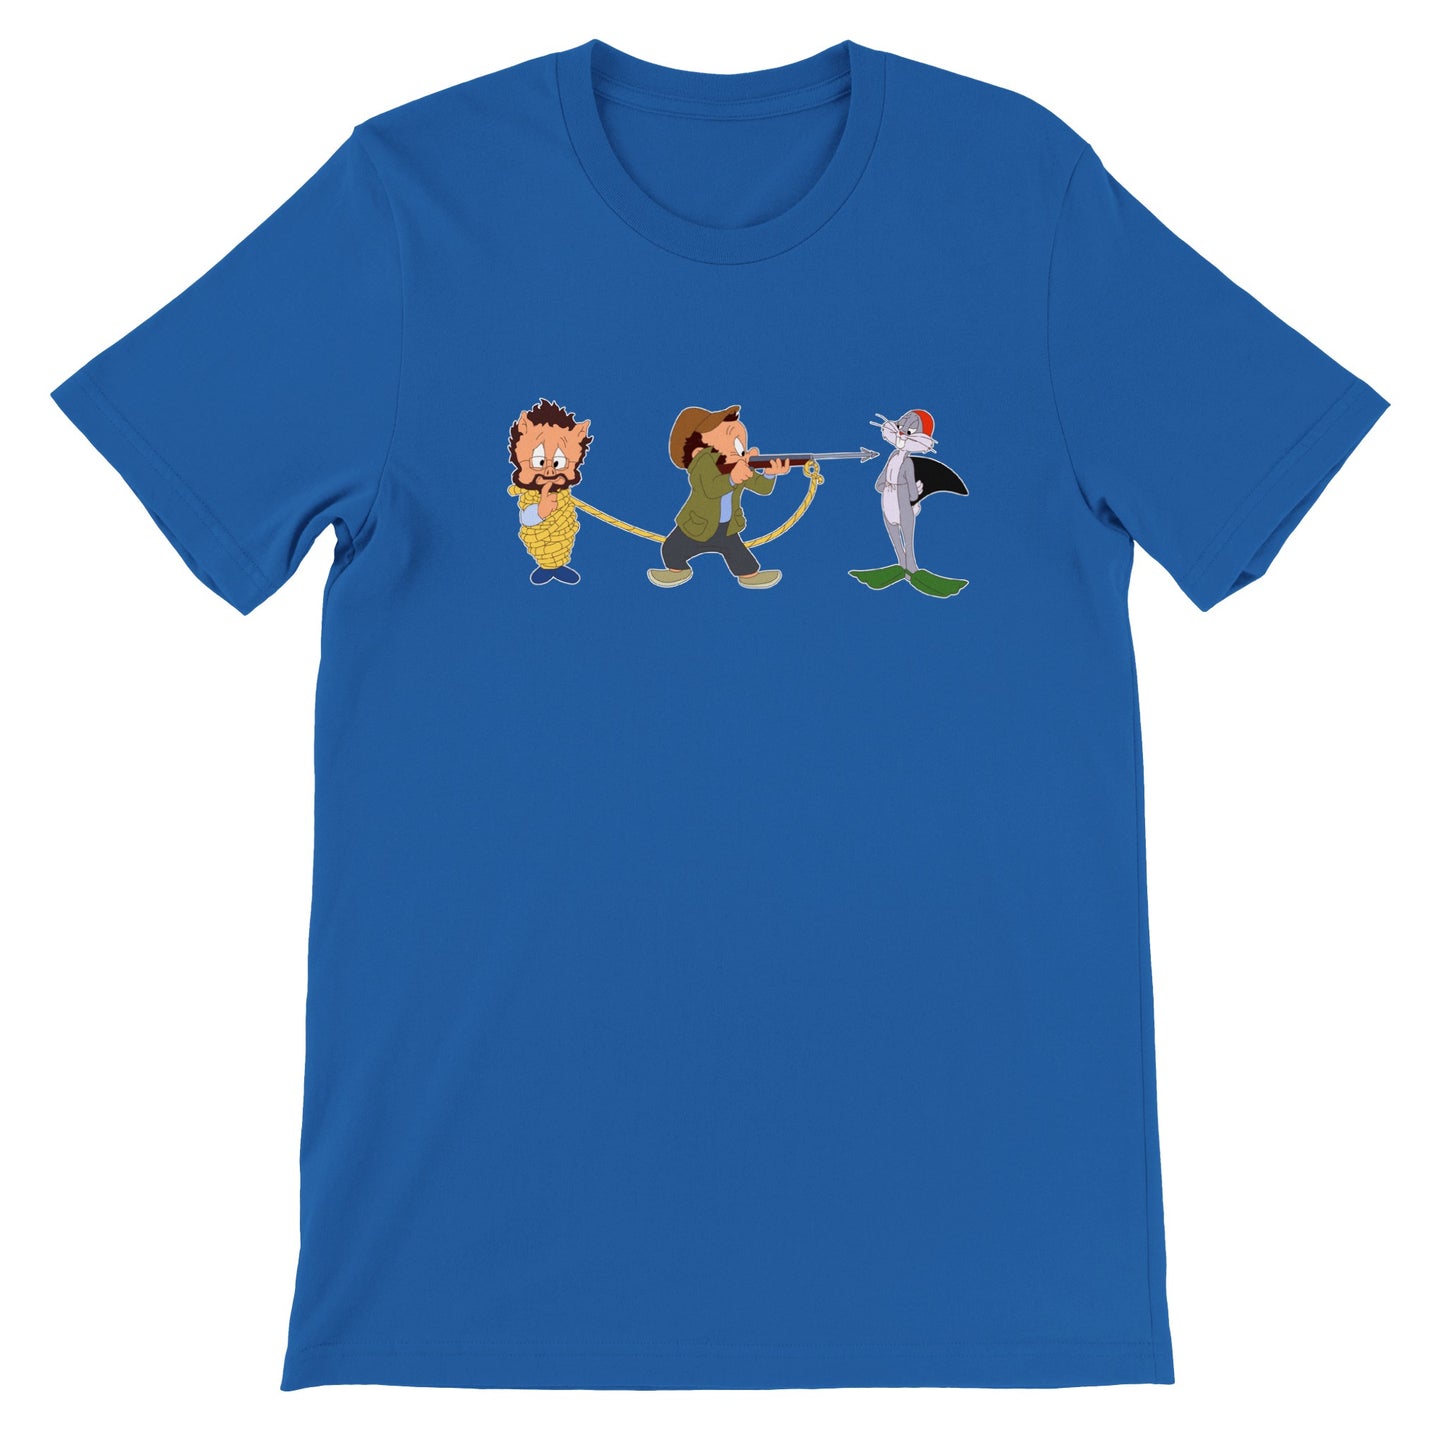 Looney Tunes X JAWS Inspired Premium T-shirt